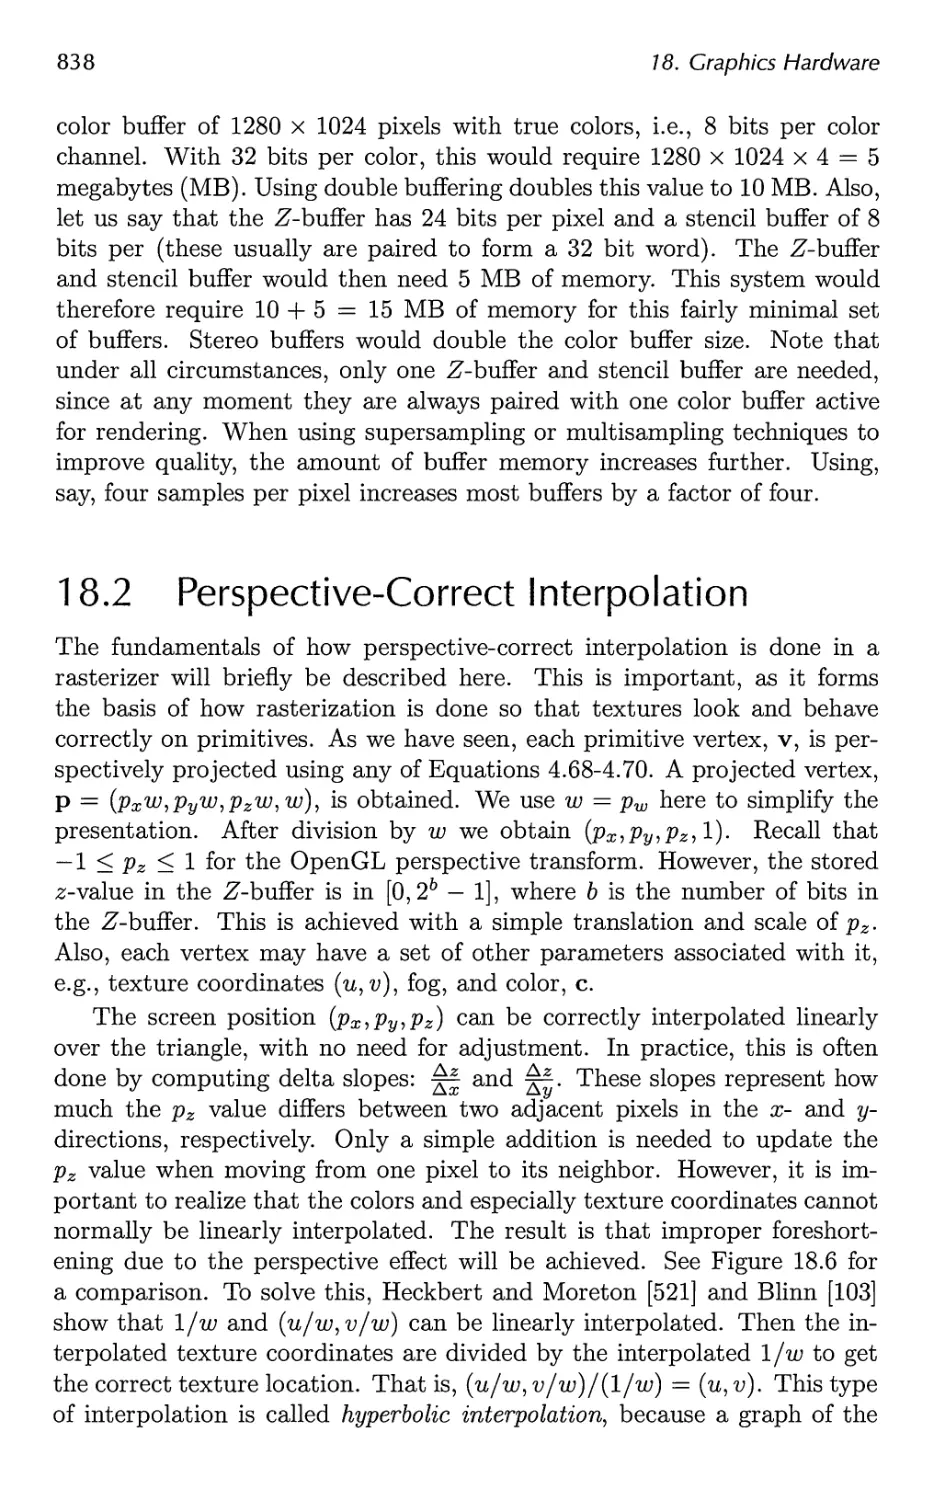 18.2 Perspective-Correct Interpolation